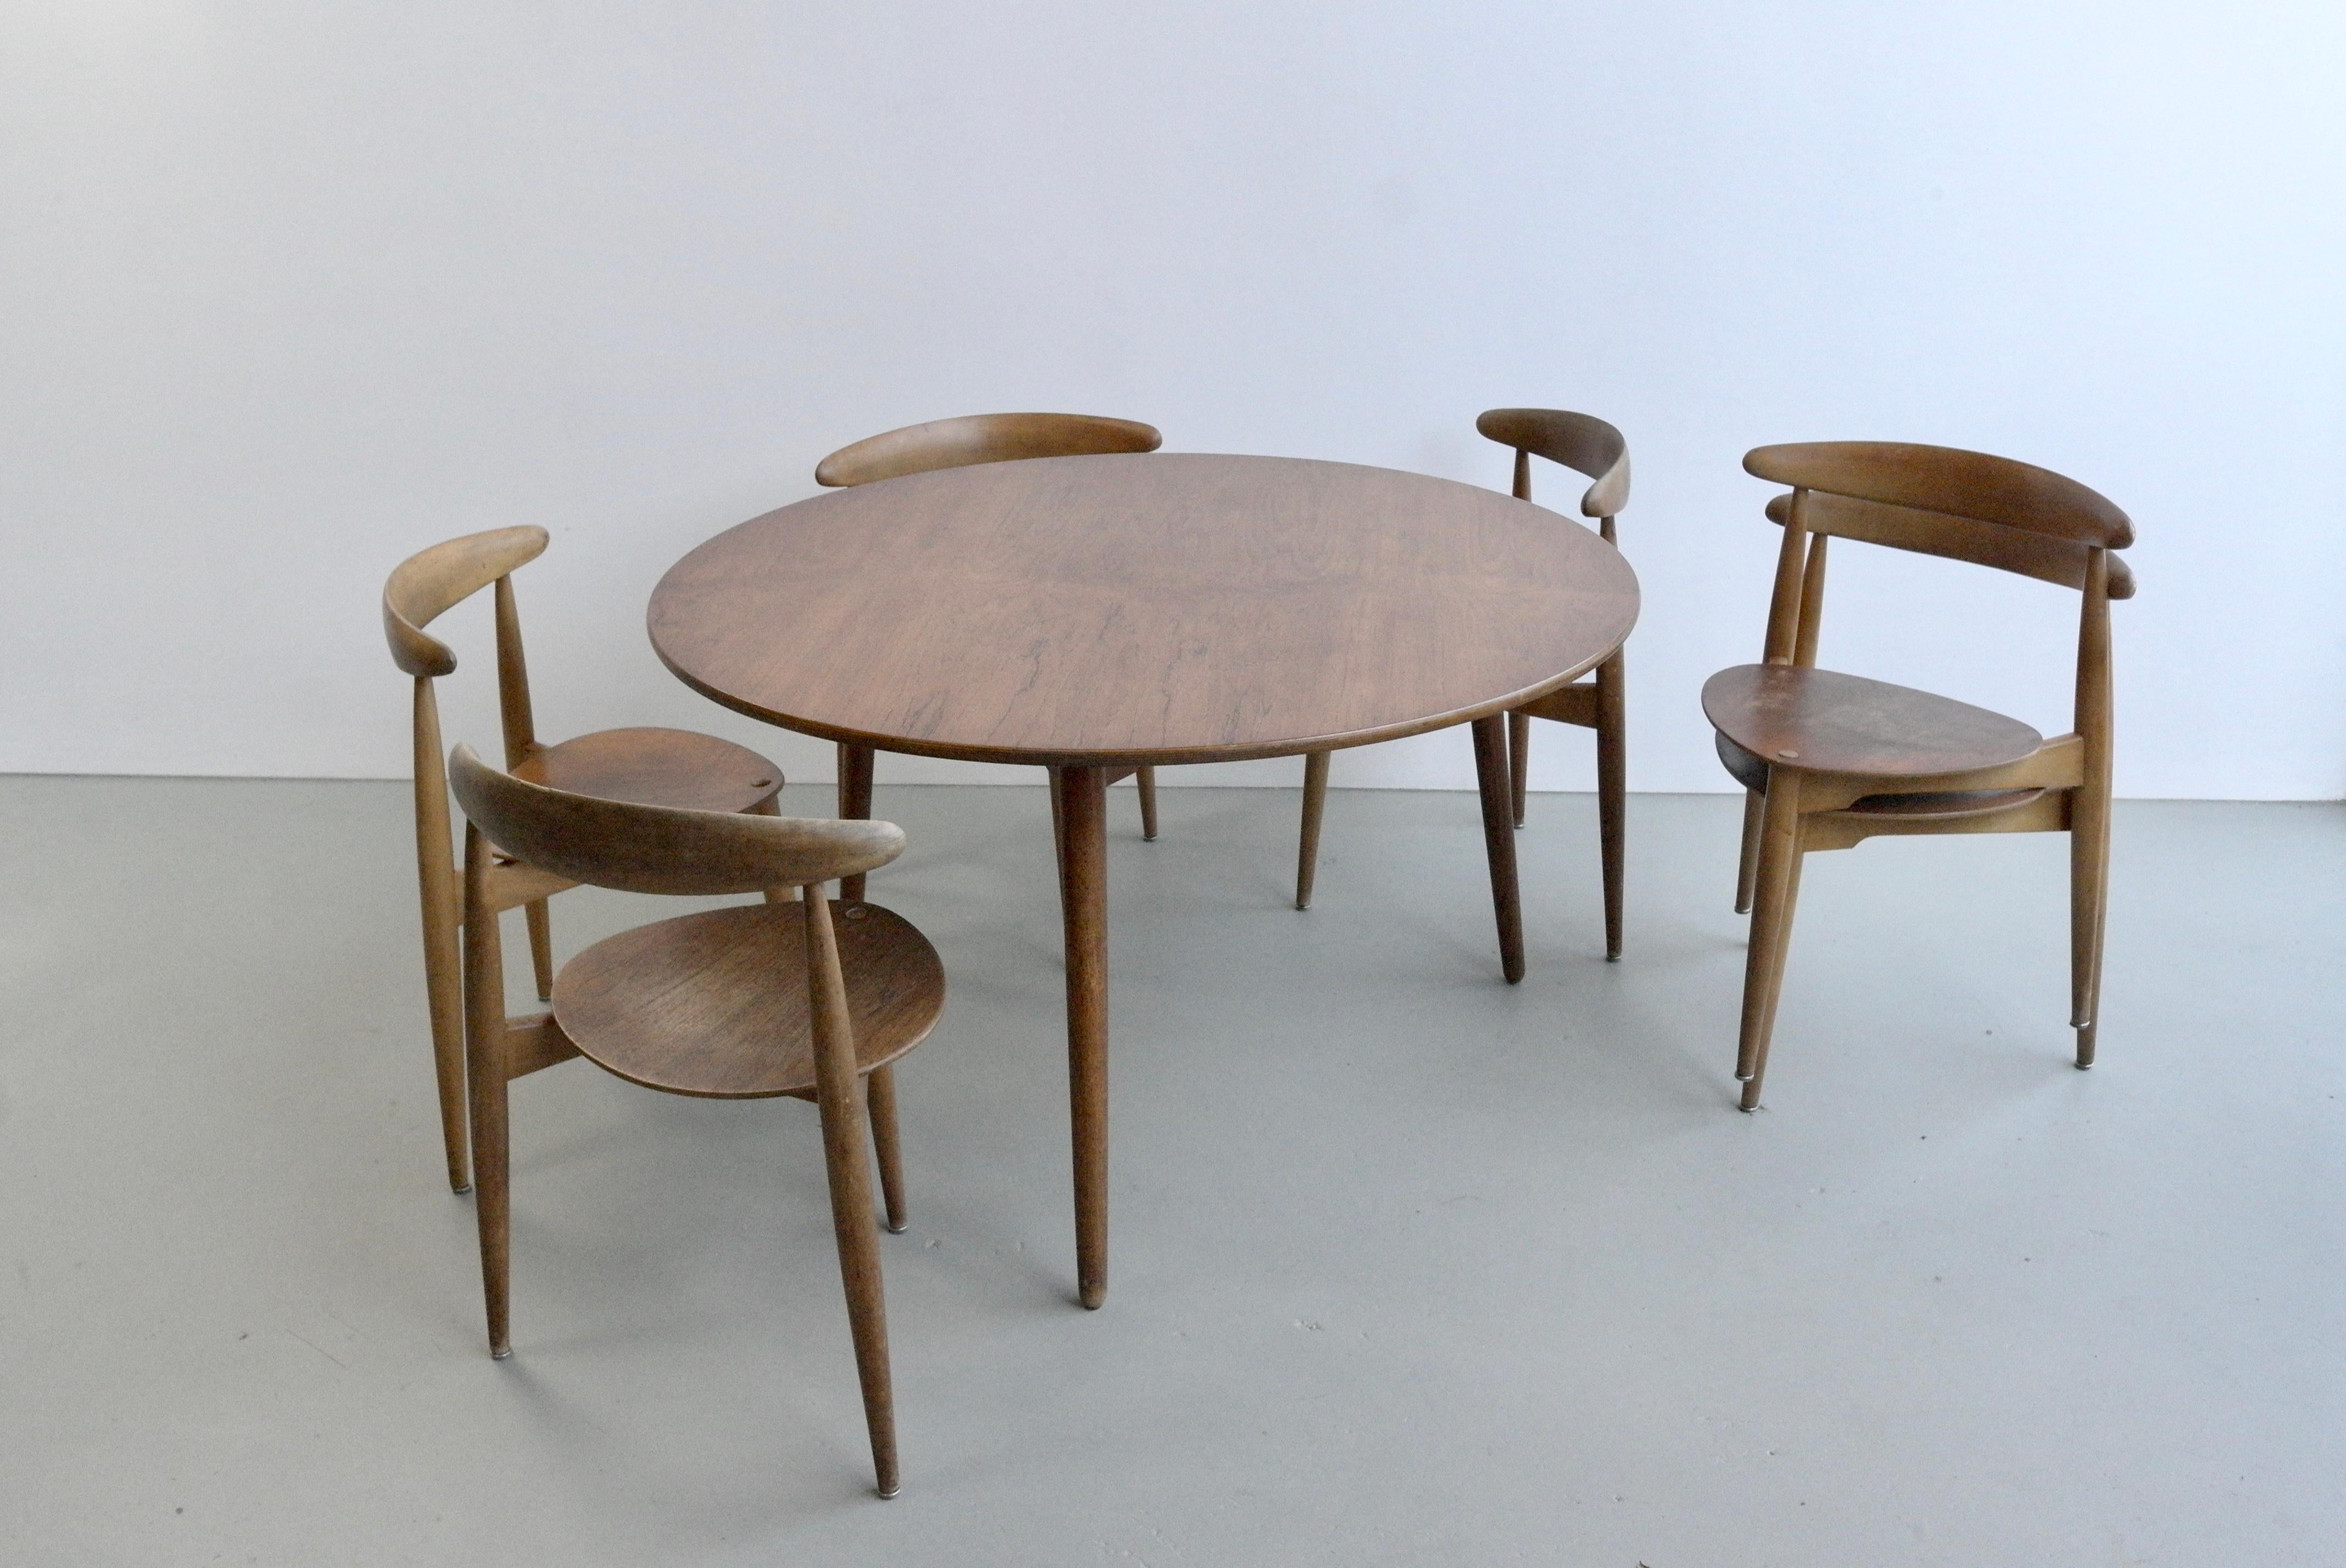 Hans Wegner Teak Dining Table and Six Heart Chairs by Fritz Hansen Denmark 1950s 1